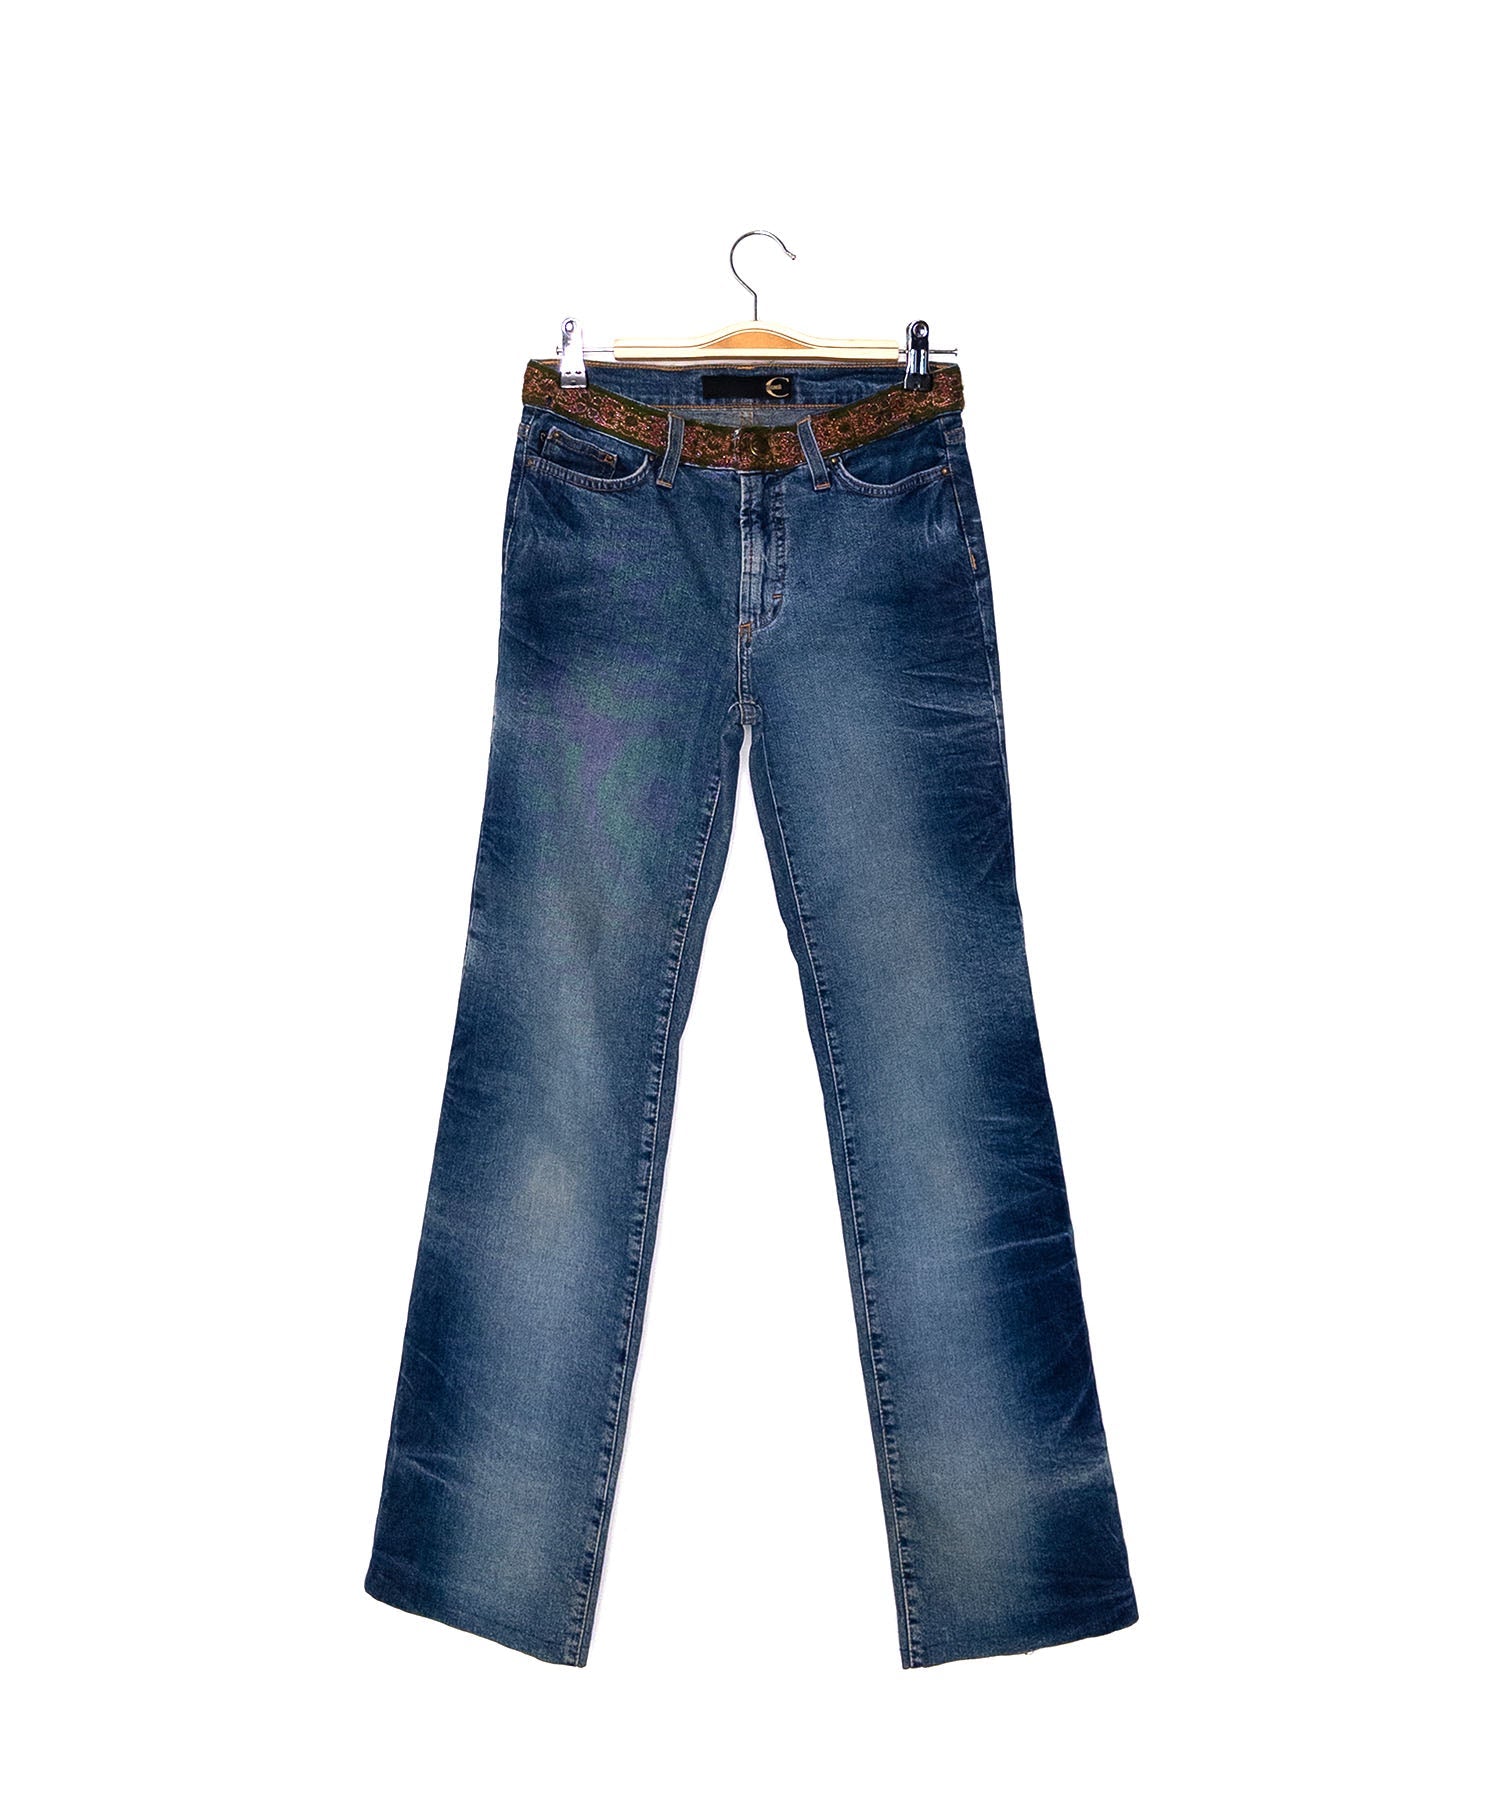 Jeans elasticizzato Just Cavalli W28-Just Cavalli-fronte.jpg; Jeans elasticizzato Just Cavalli W28-Just Cavalli-retro.jpg